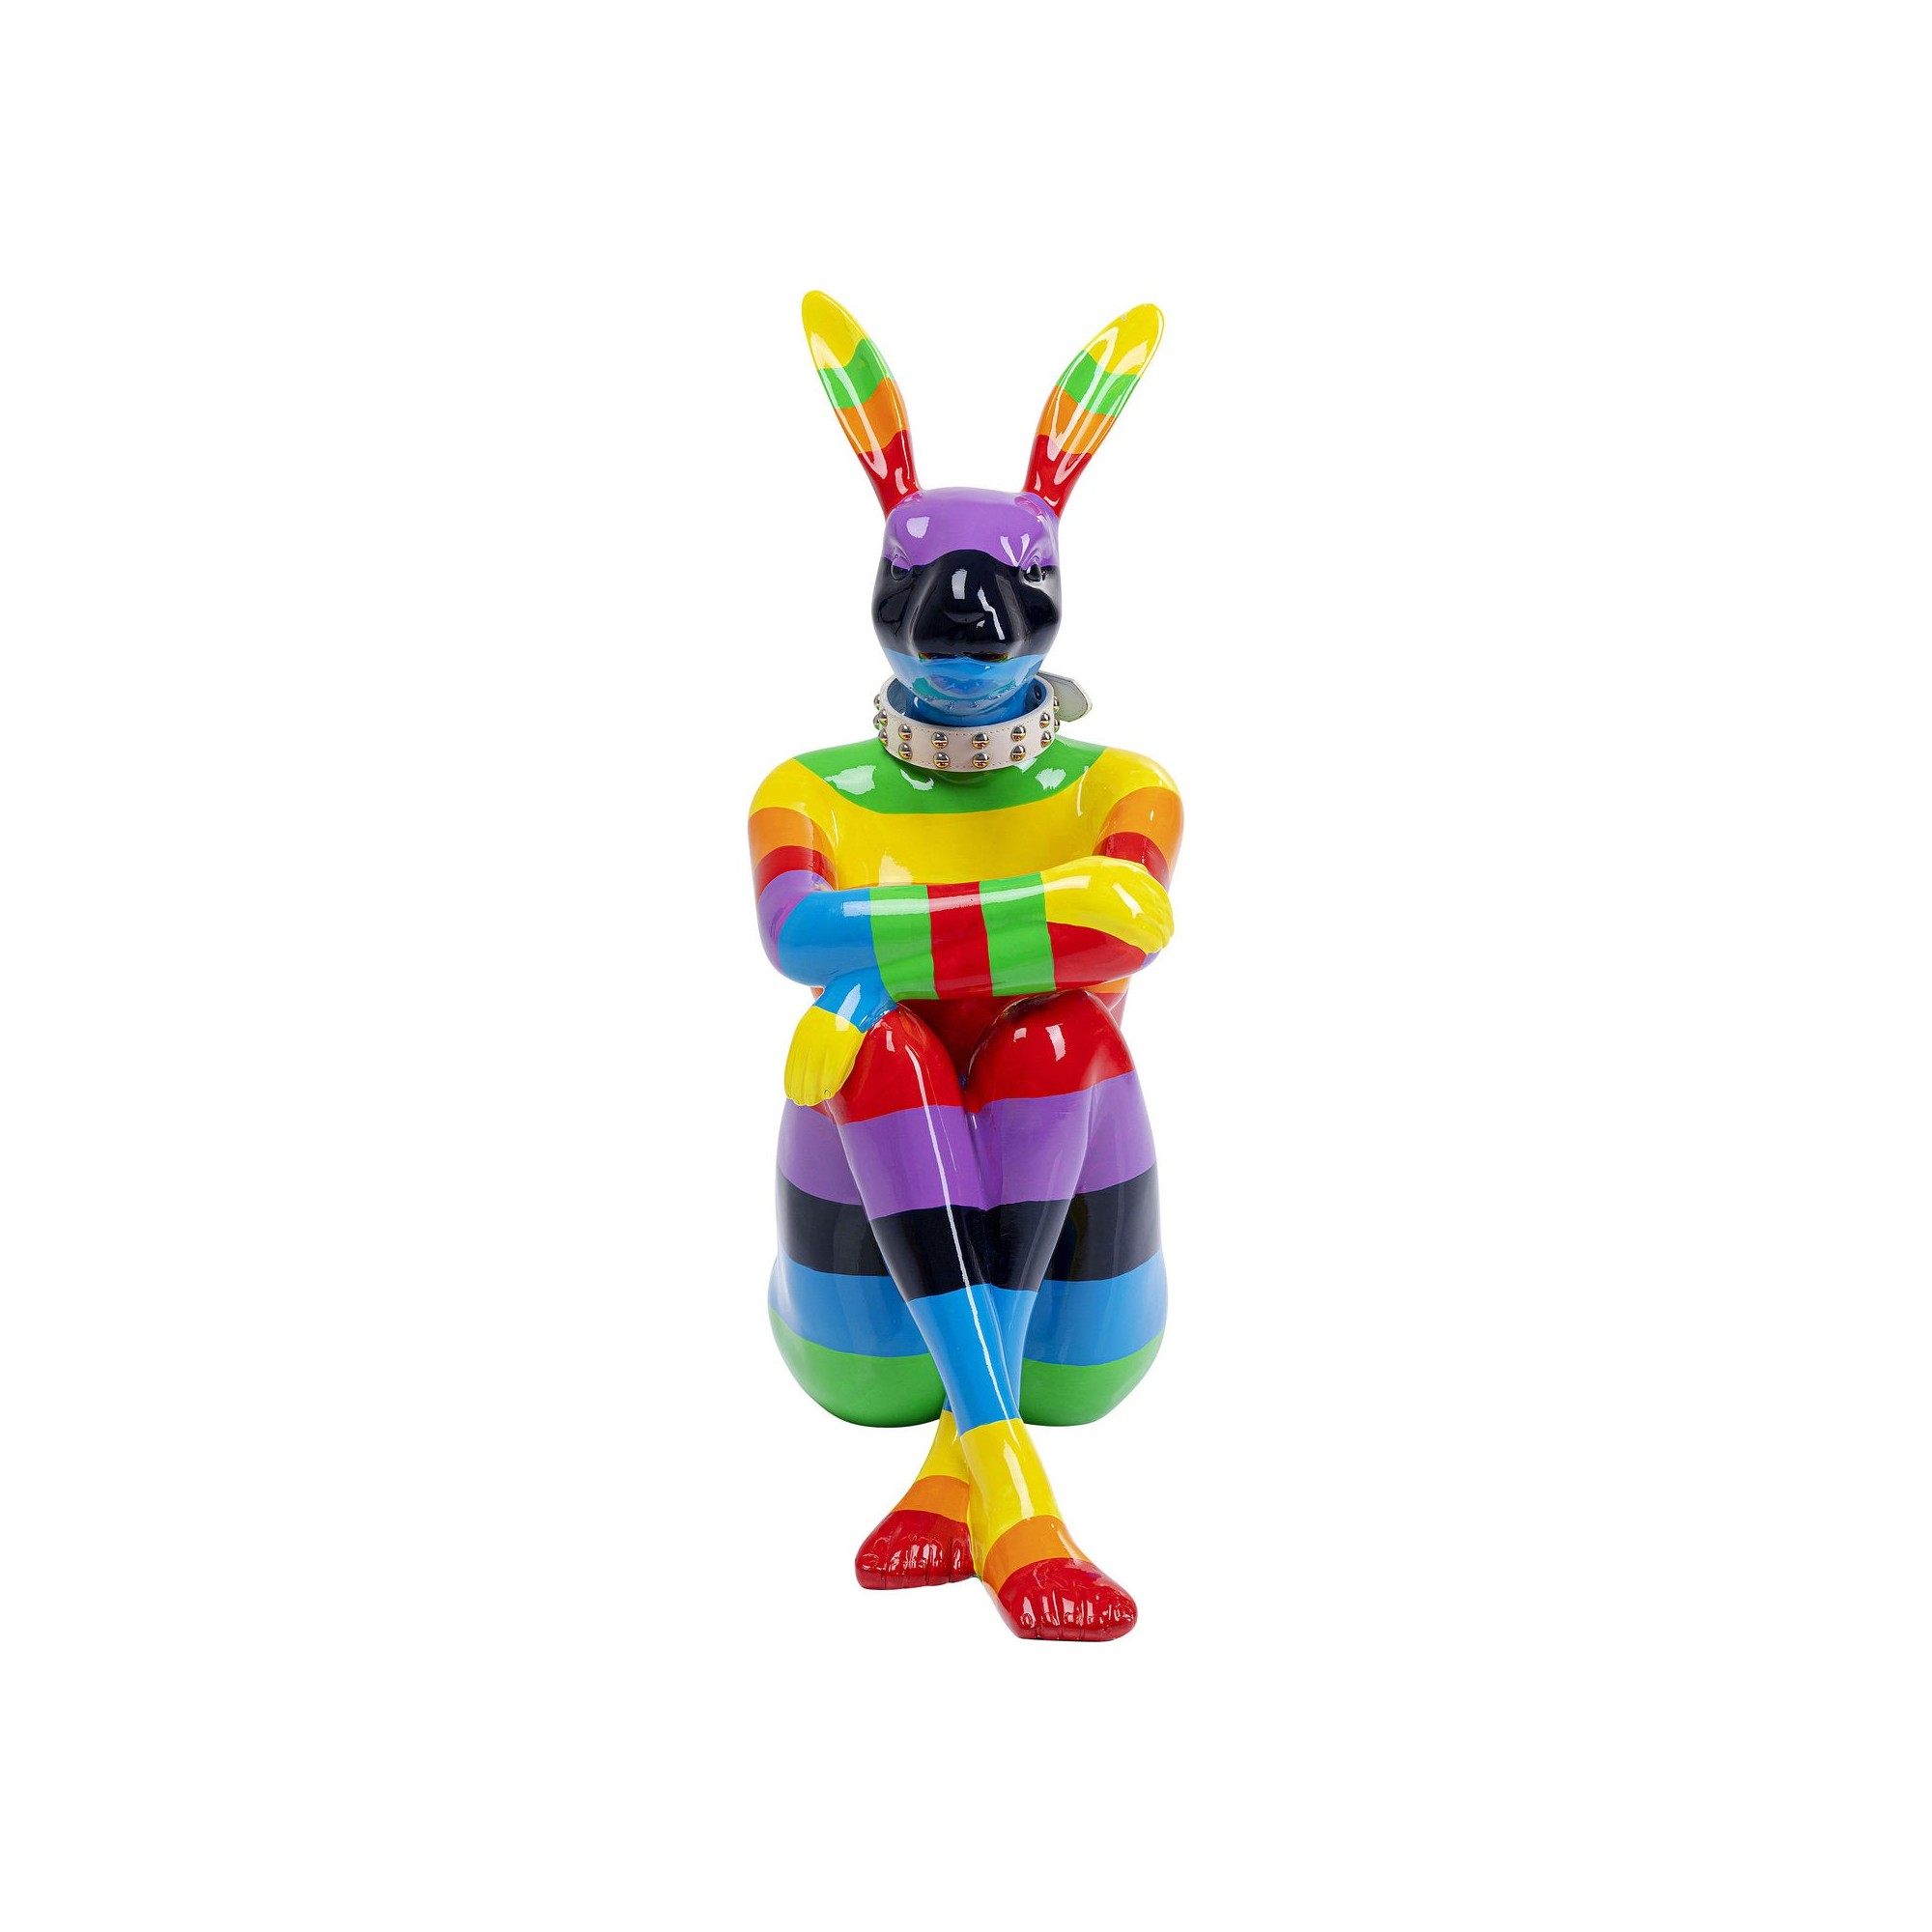 Objet décoratif Sitting Rabbit rainbow 80cm